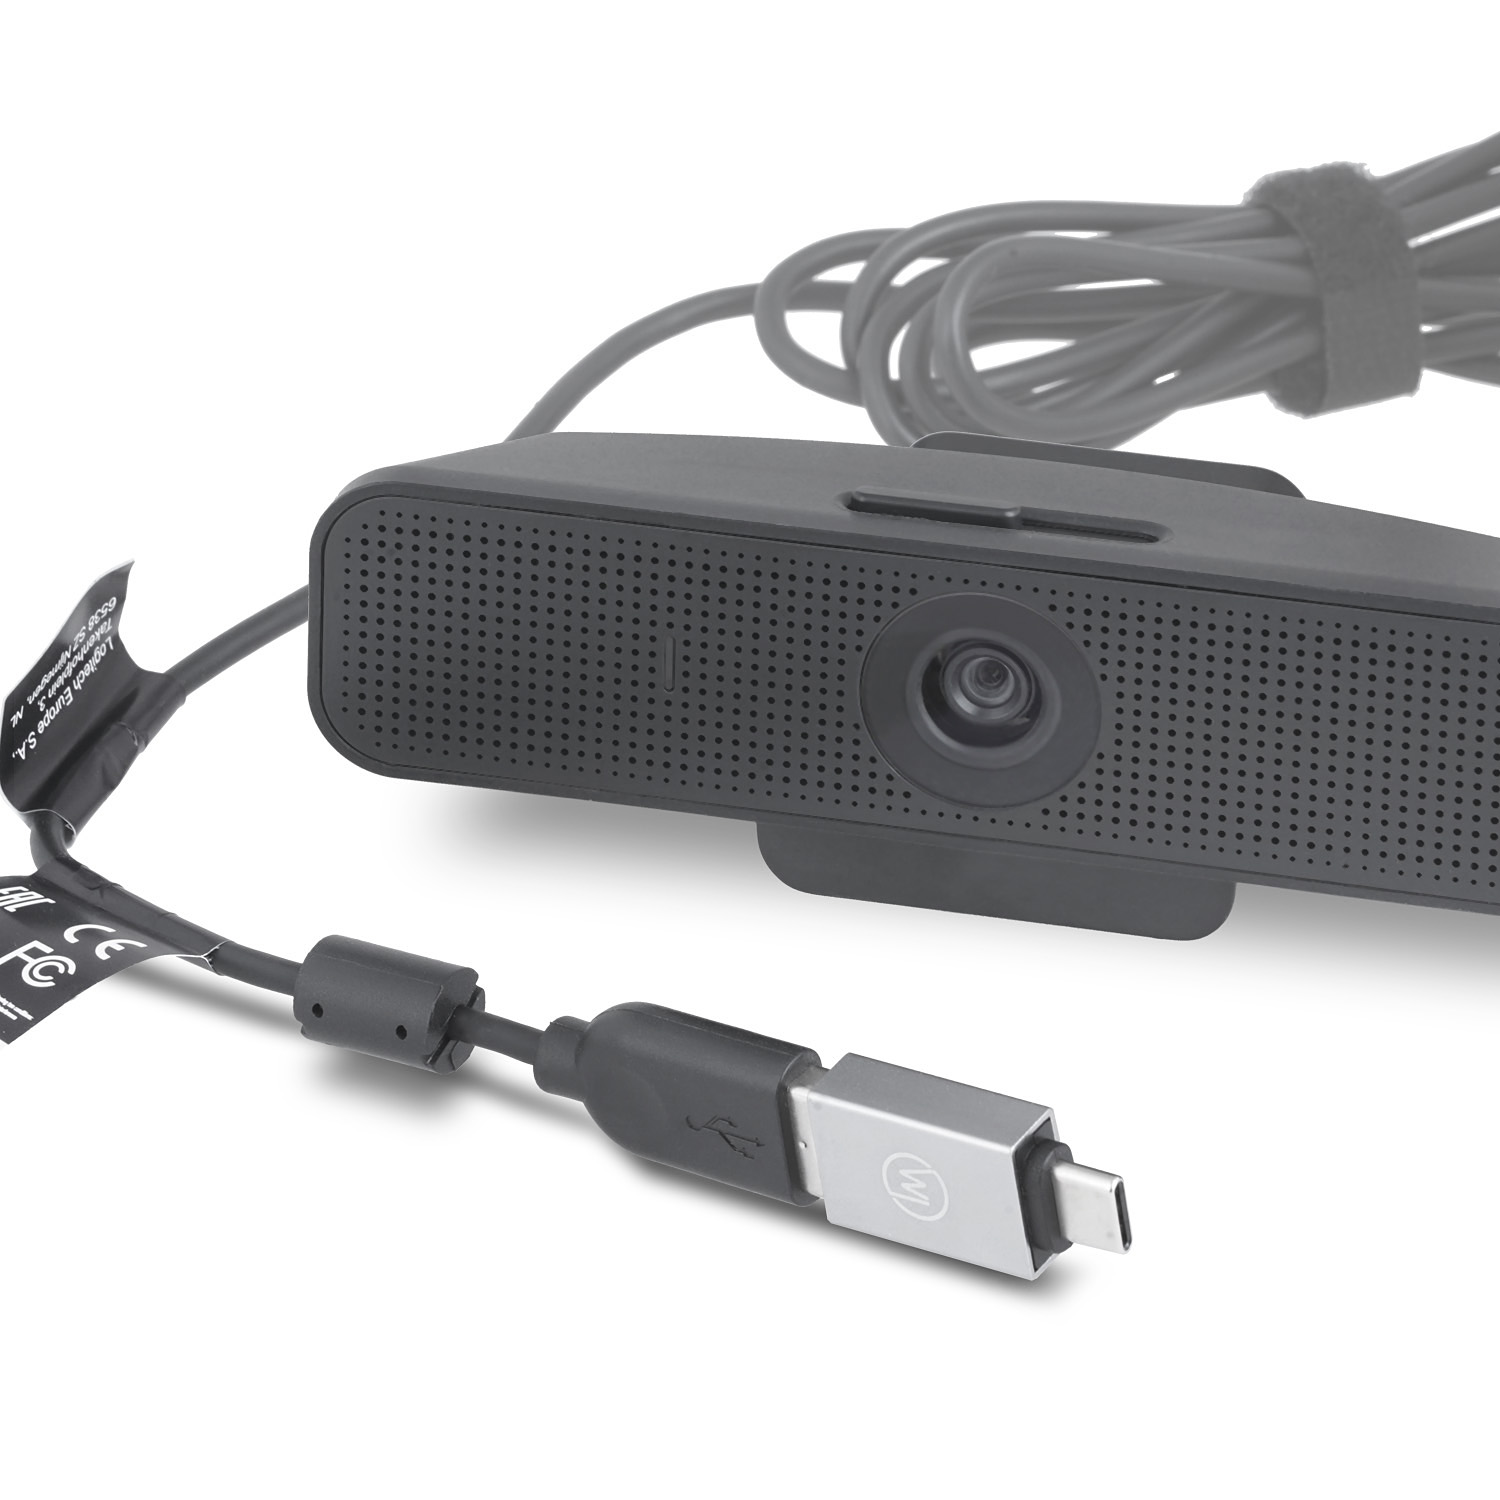 WICKED CHILI Universal Nulaxy HD und mit Jelly-Comb, Laptop Adapter Webcams für Logitech, Teaisiy, USB-C USB Adapter für